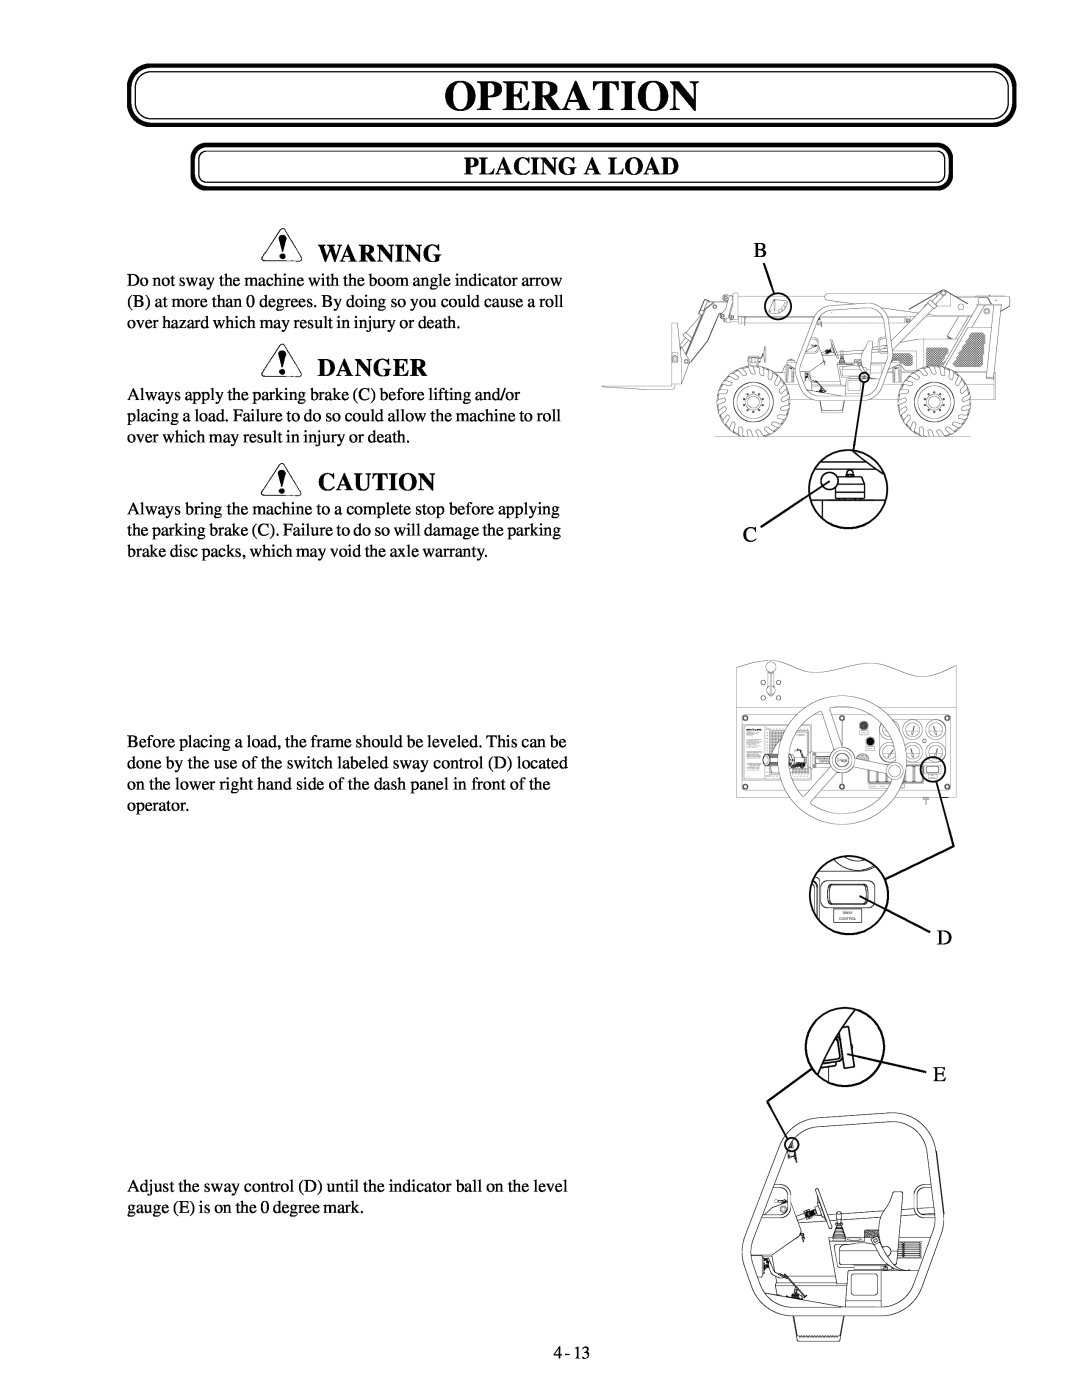 Genie GTH-636 manual Placing A Load Warningb, Operation, Danger 